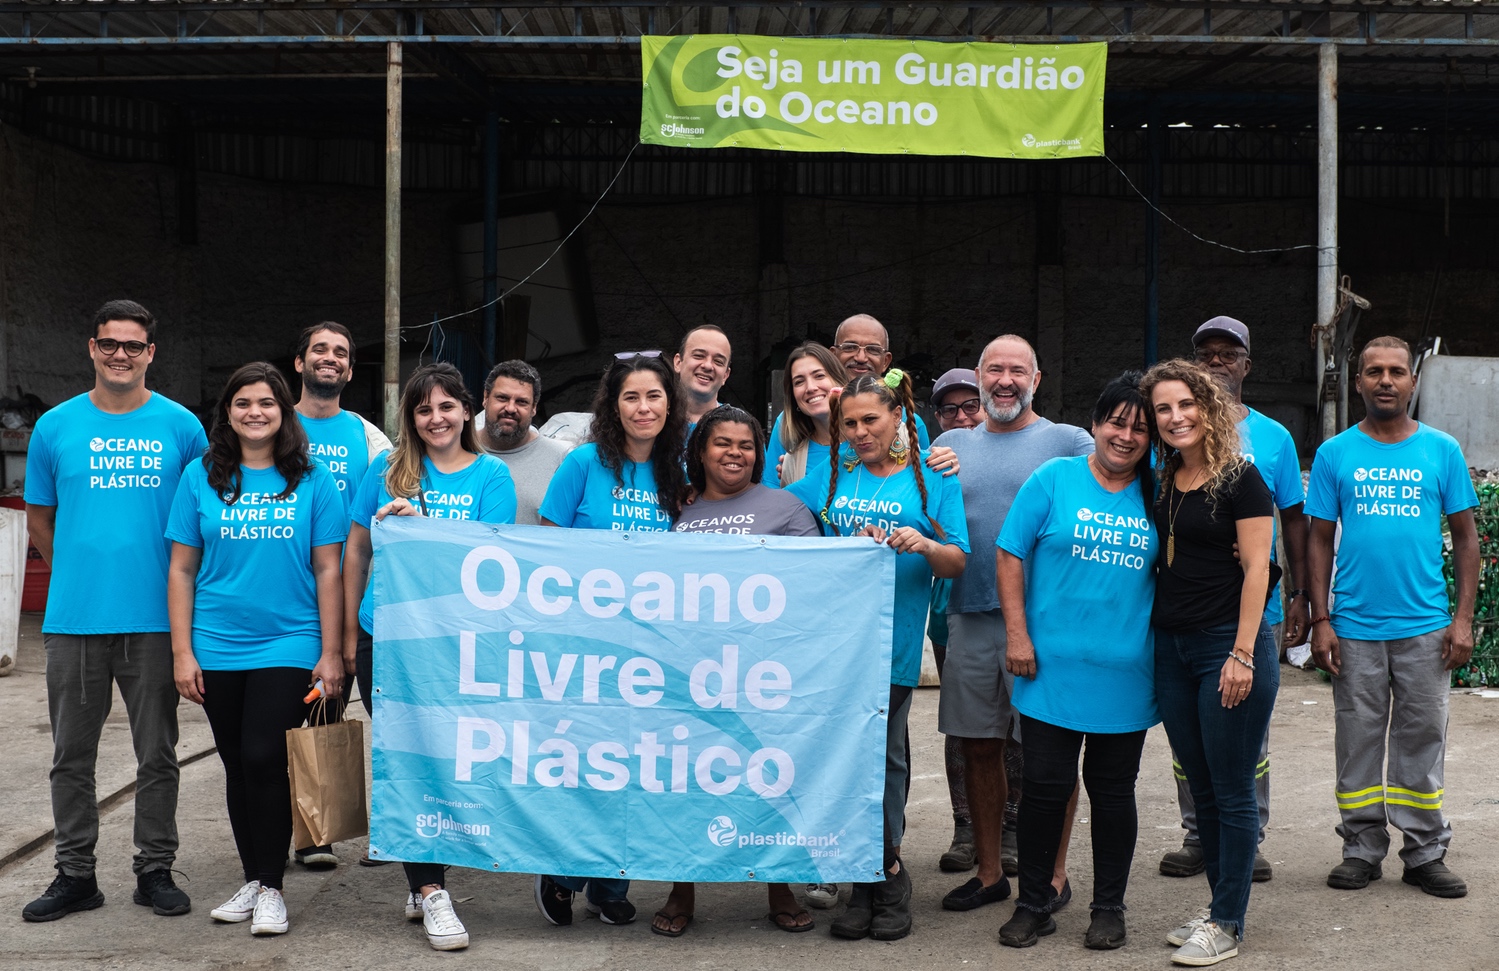 Group photo of people wearing t-shirts that read "Oceano Livre de Plástico"